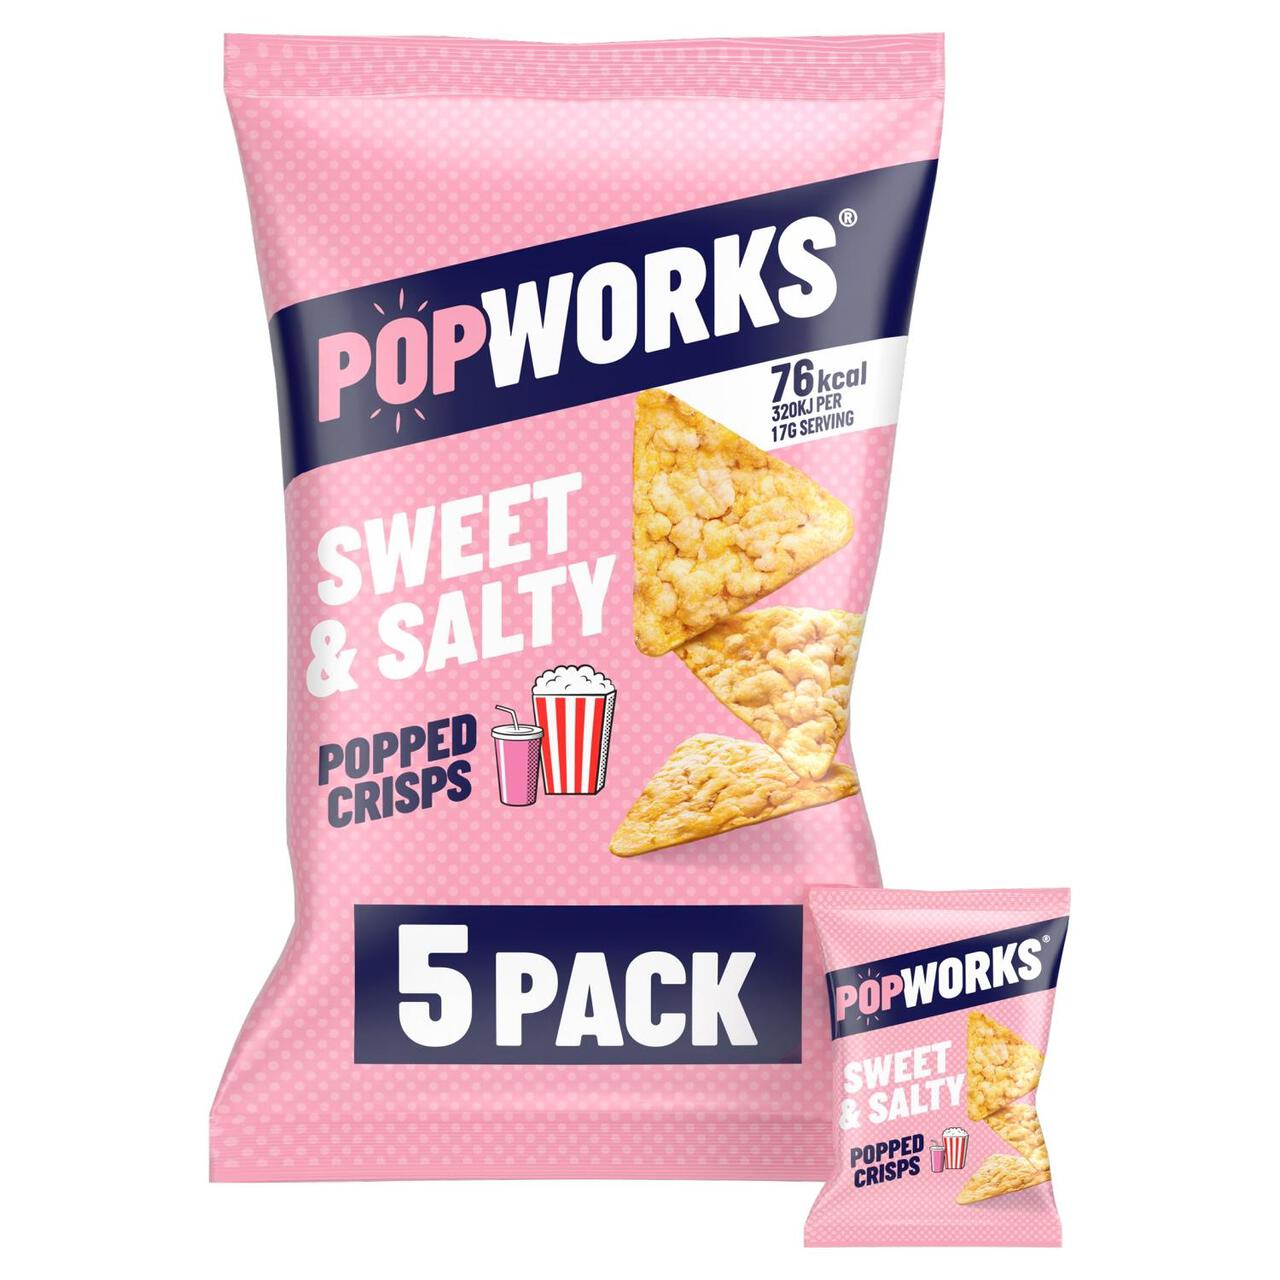 Popworks Sweet & Salty Multipack Popped Crisps 5 per pack